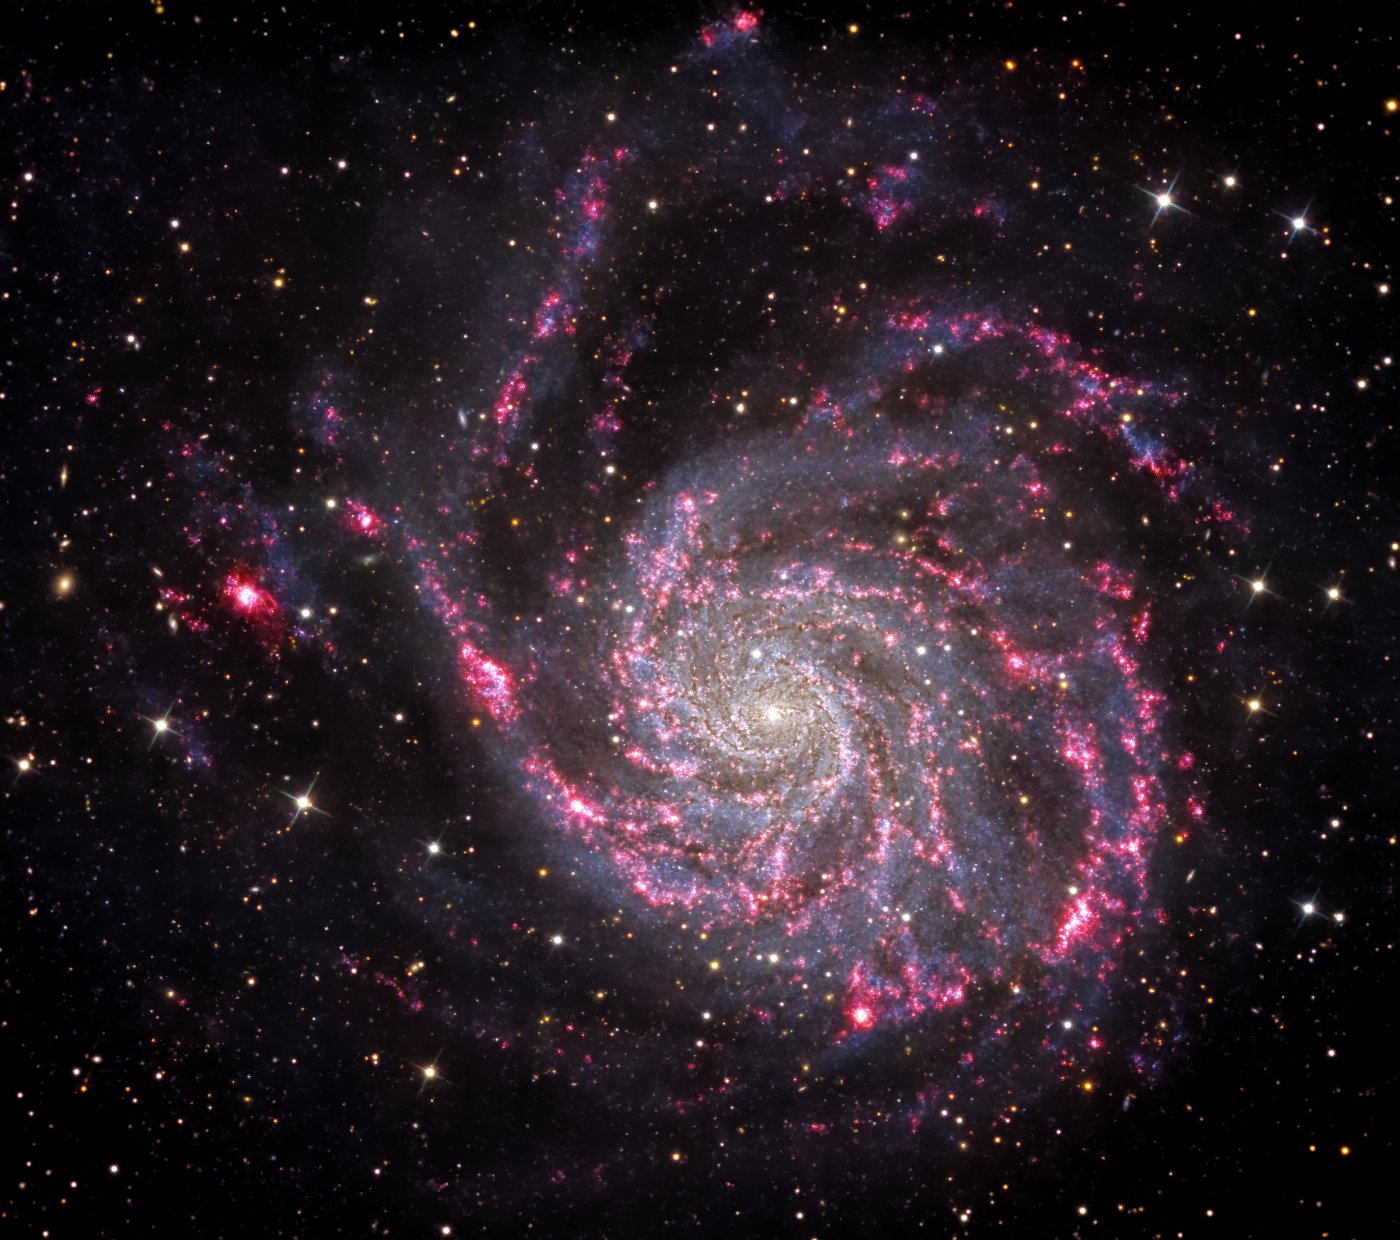 M101 (Pinwheel Galaxy) in H-alpha and continuum light